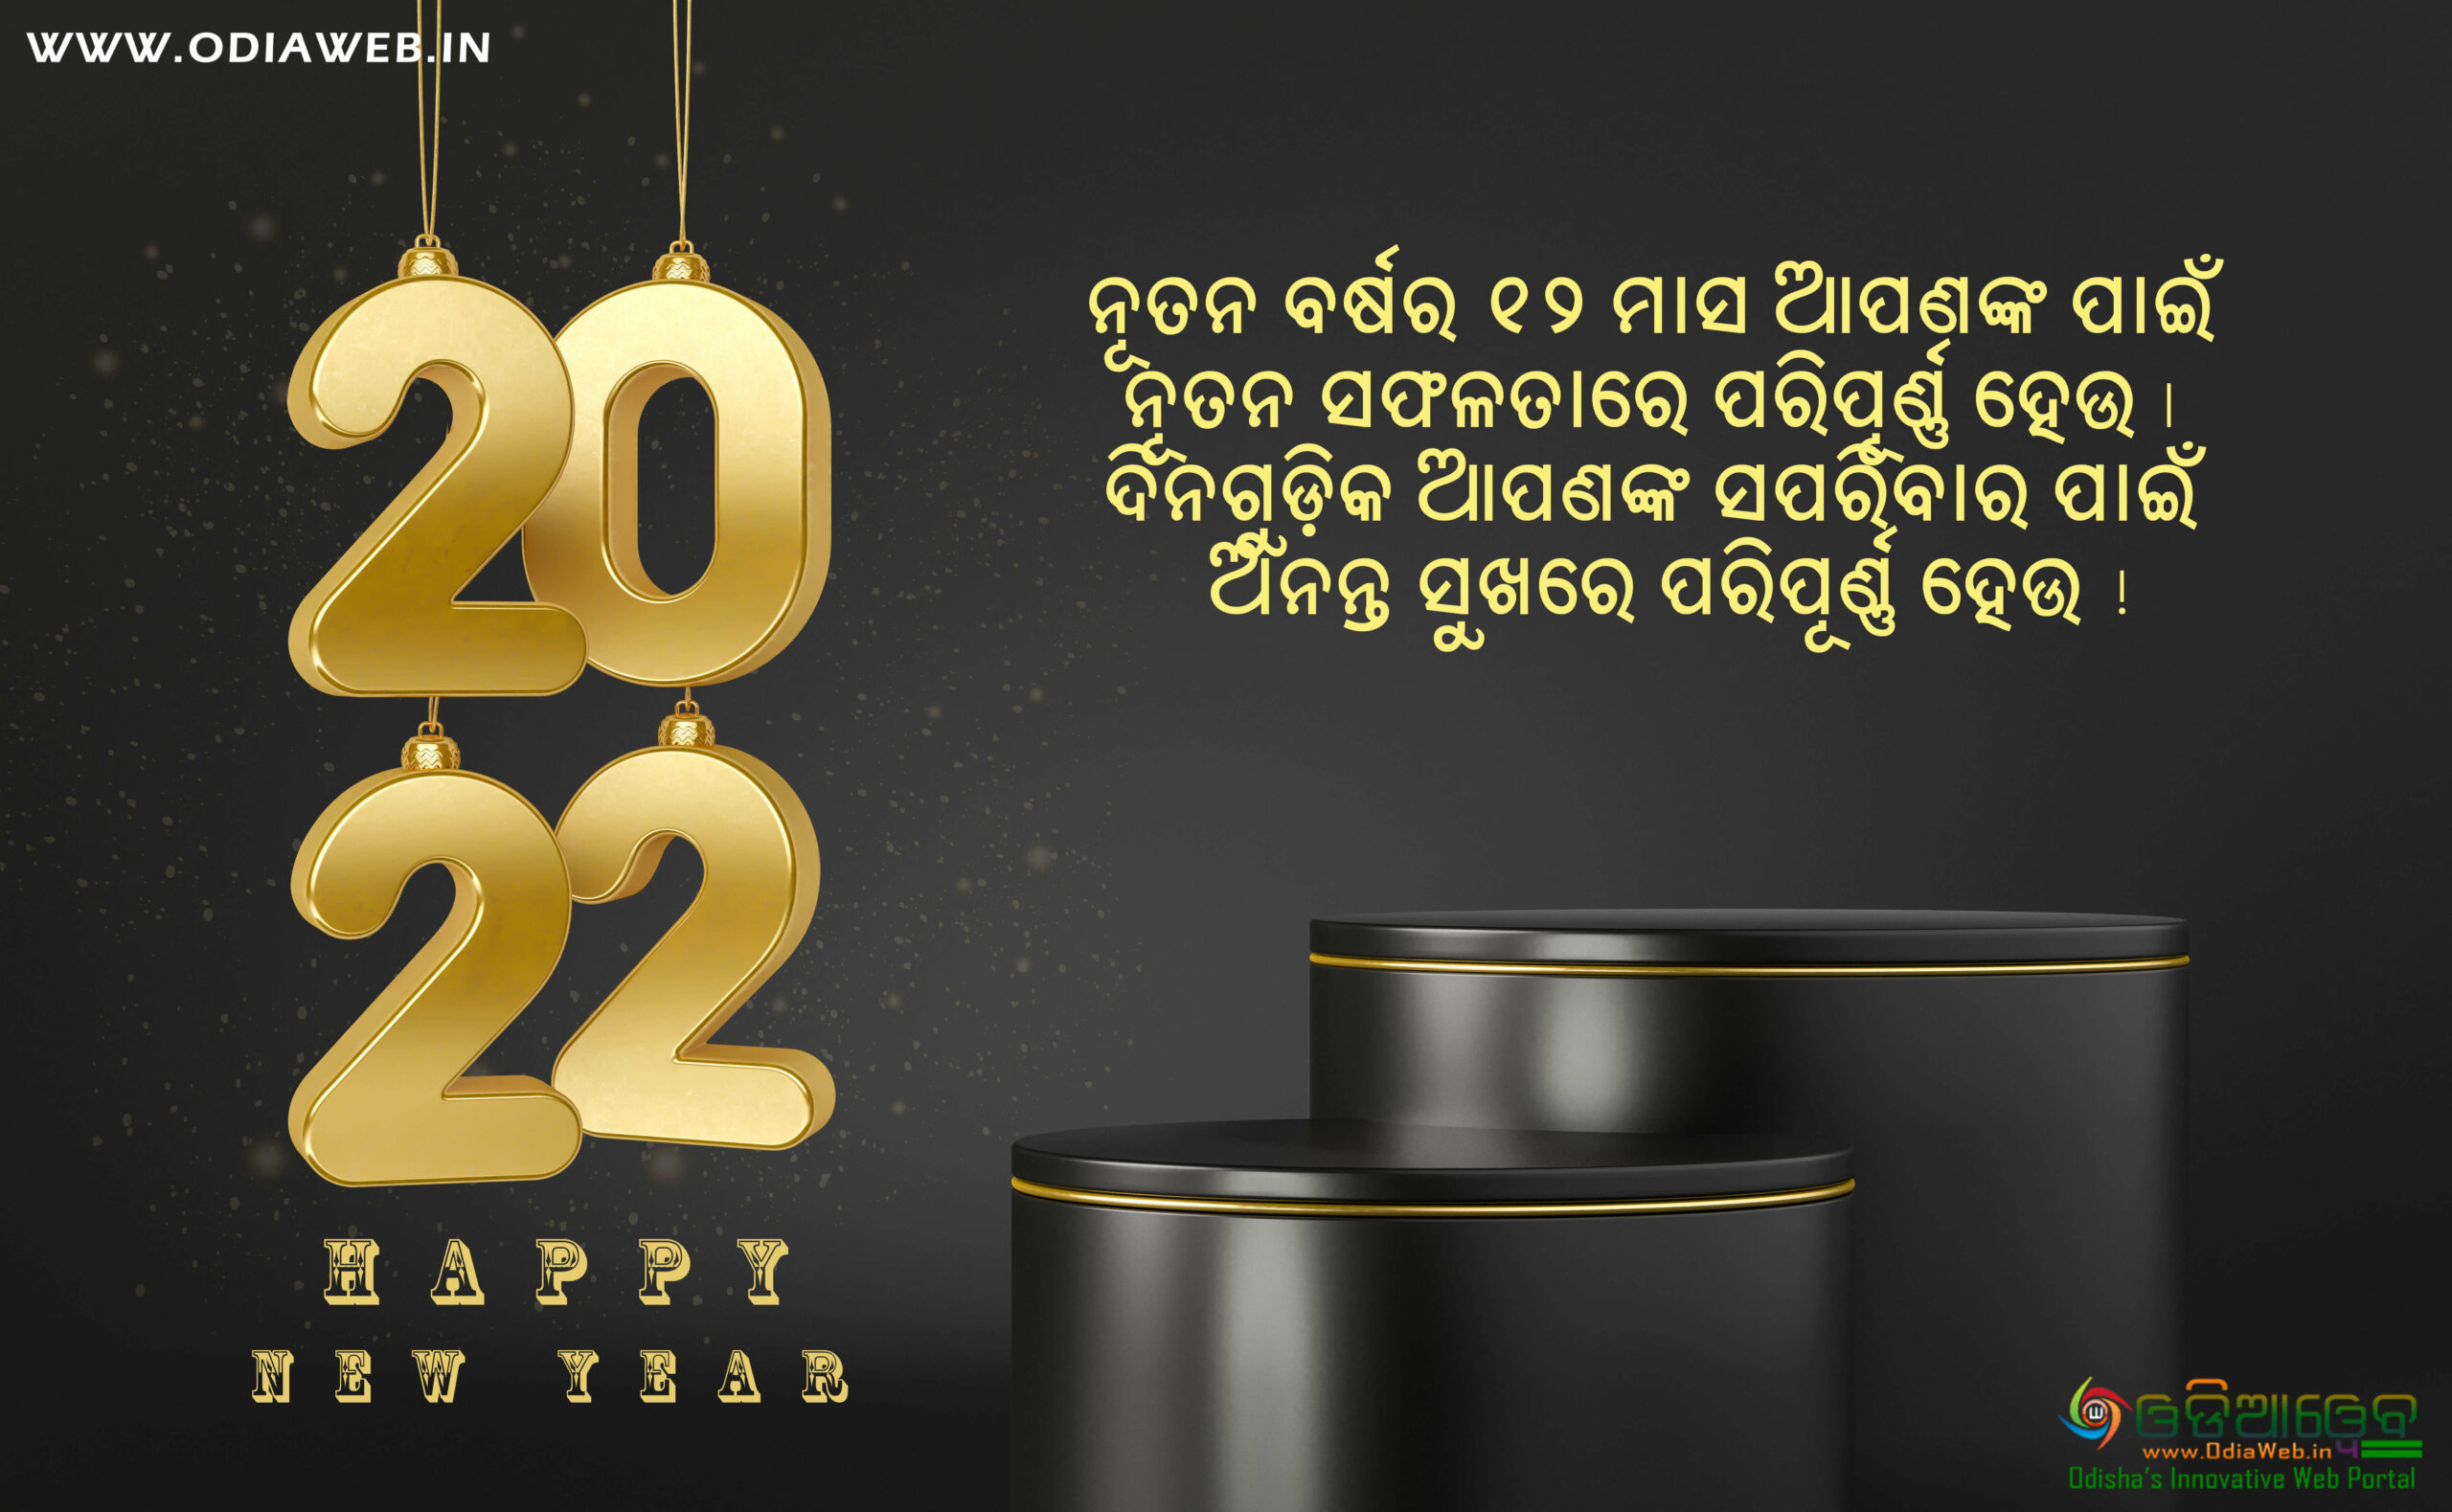 Happy New Year 2022 Wishes3 in Odia